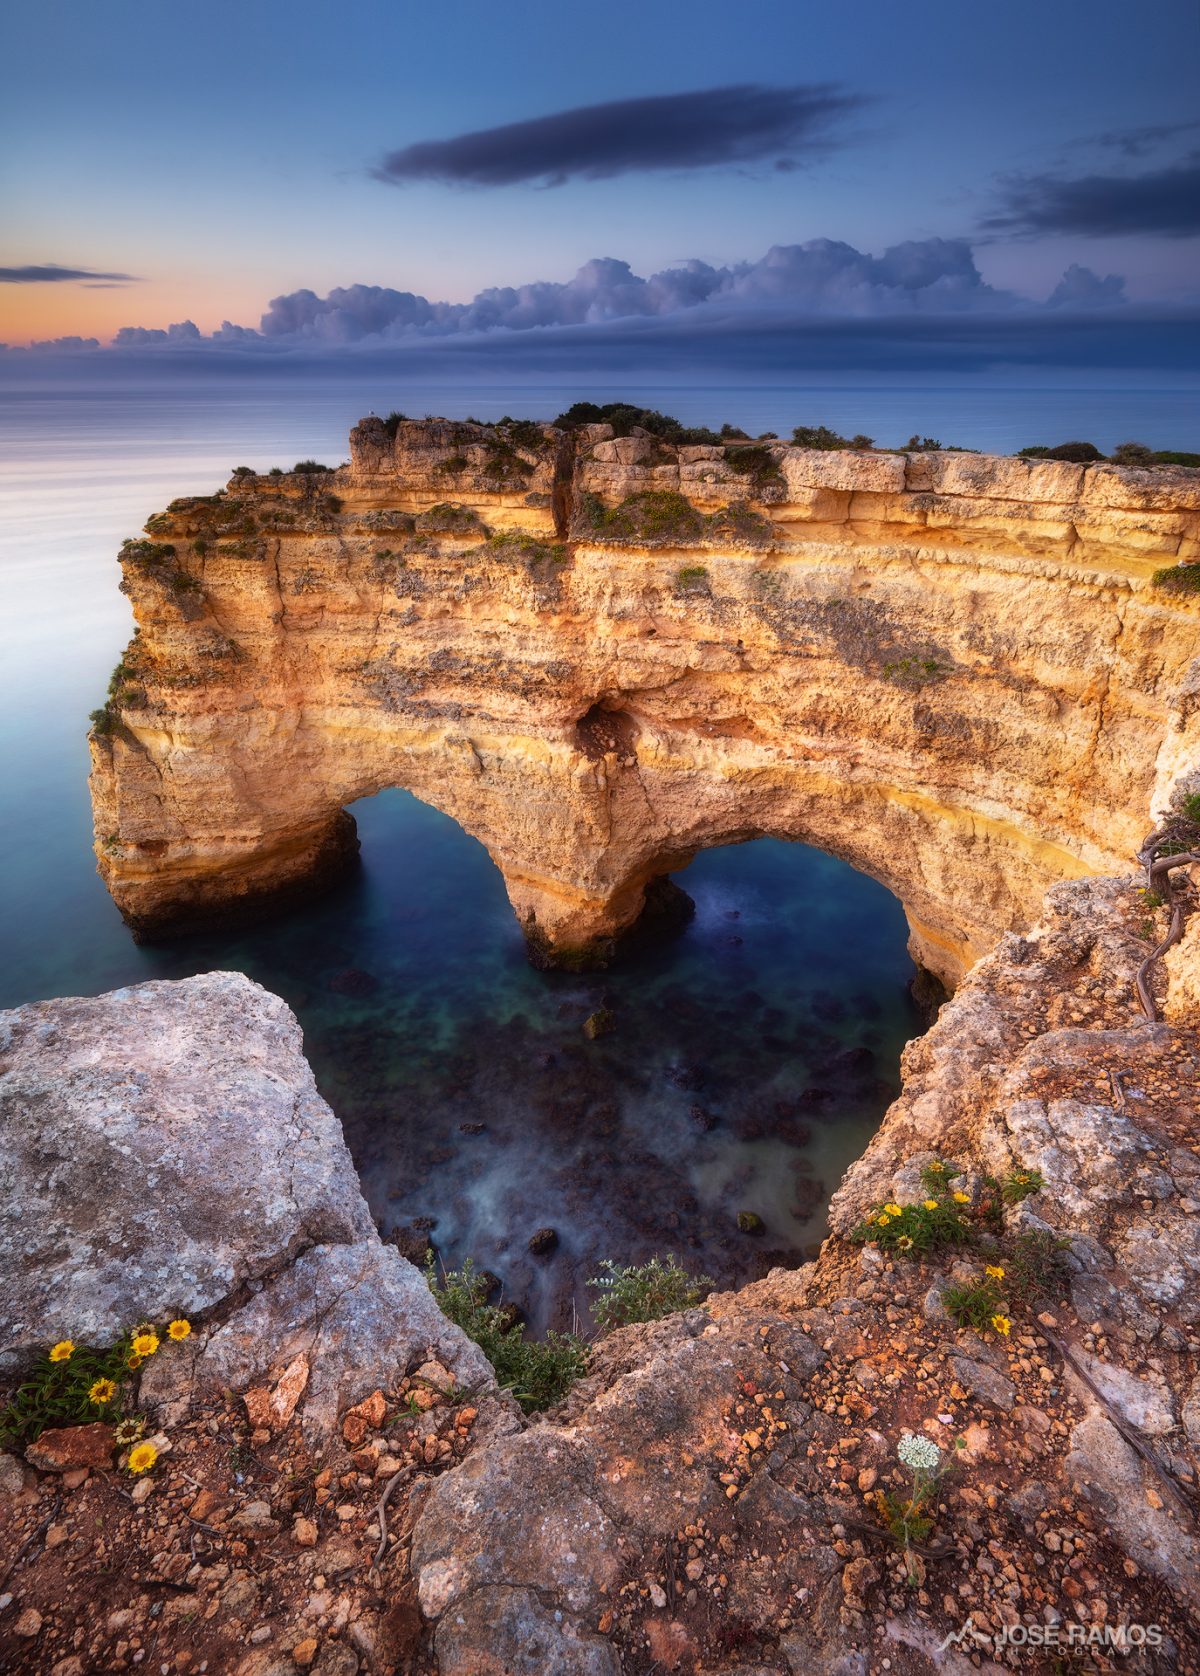 Landscape photo shot during sunrise in Marinha Beach, Algarve, Portugal, showing a heart shape hidden in the cliffs